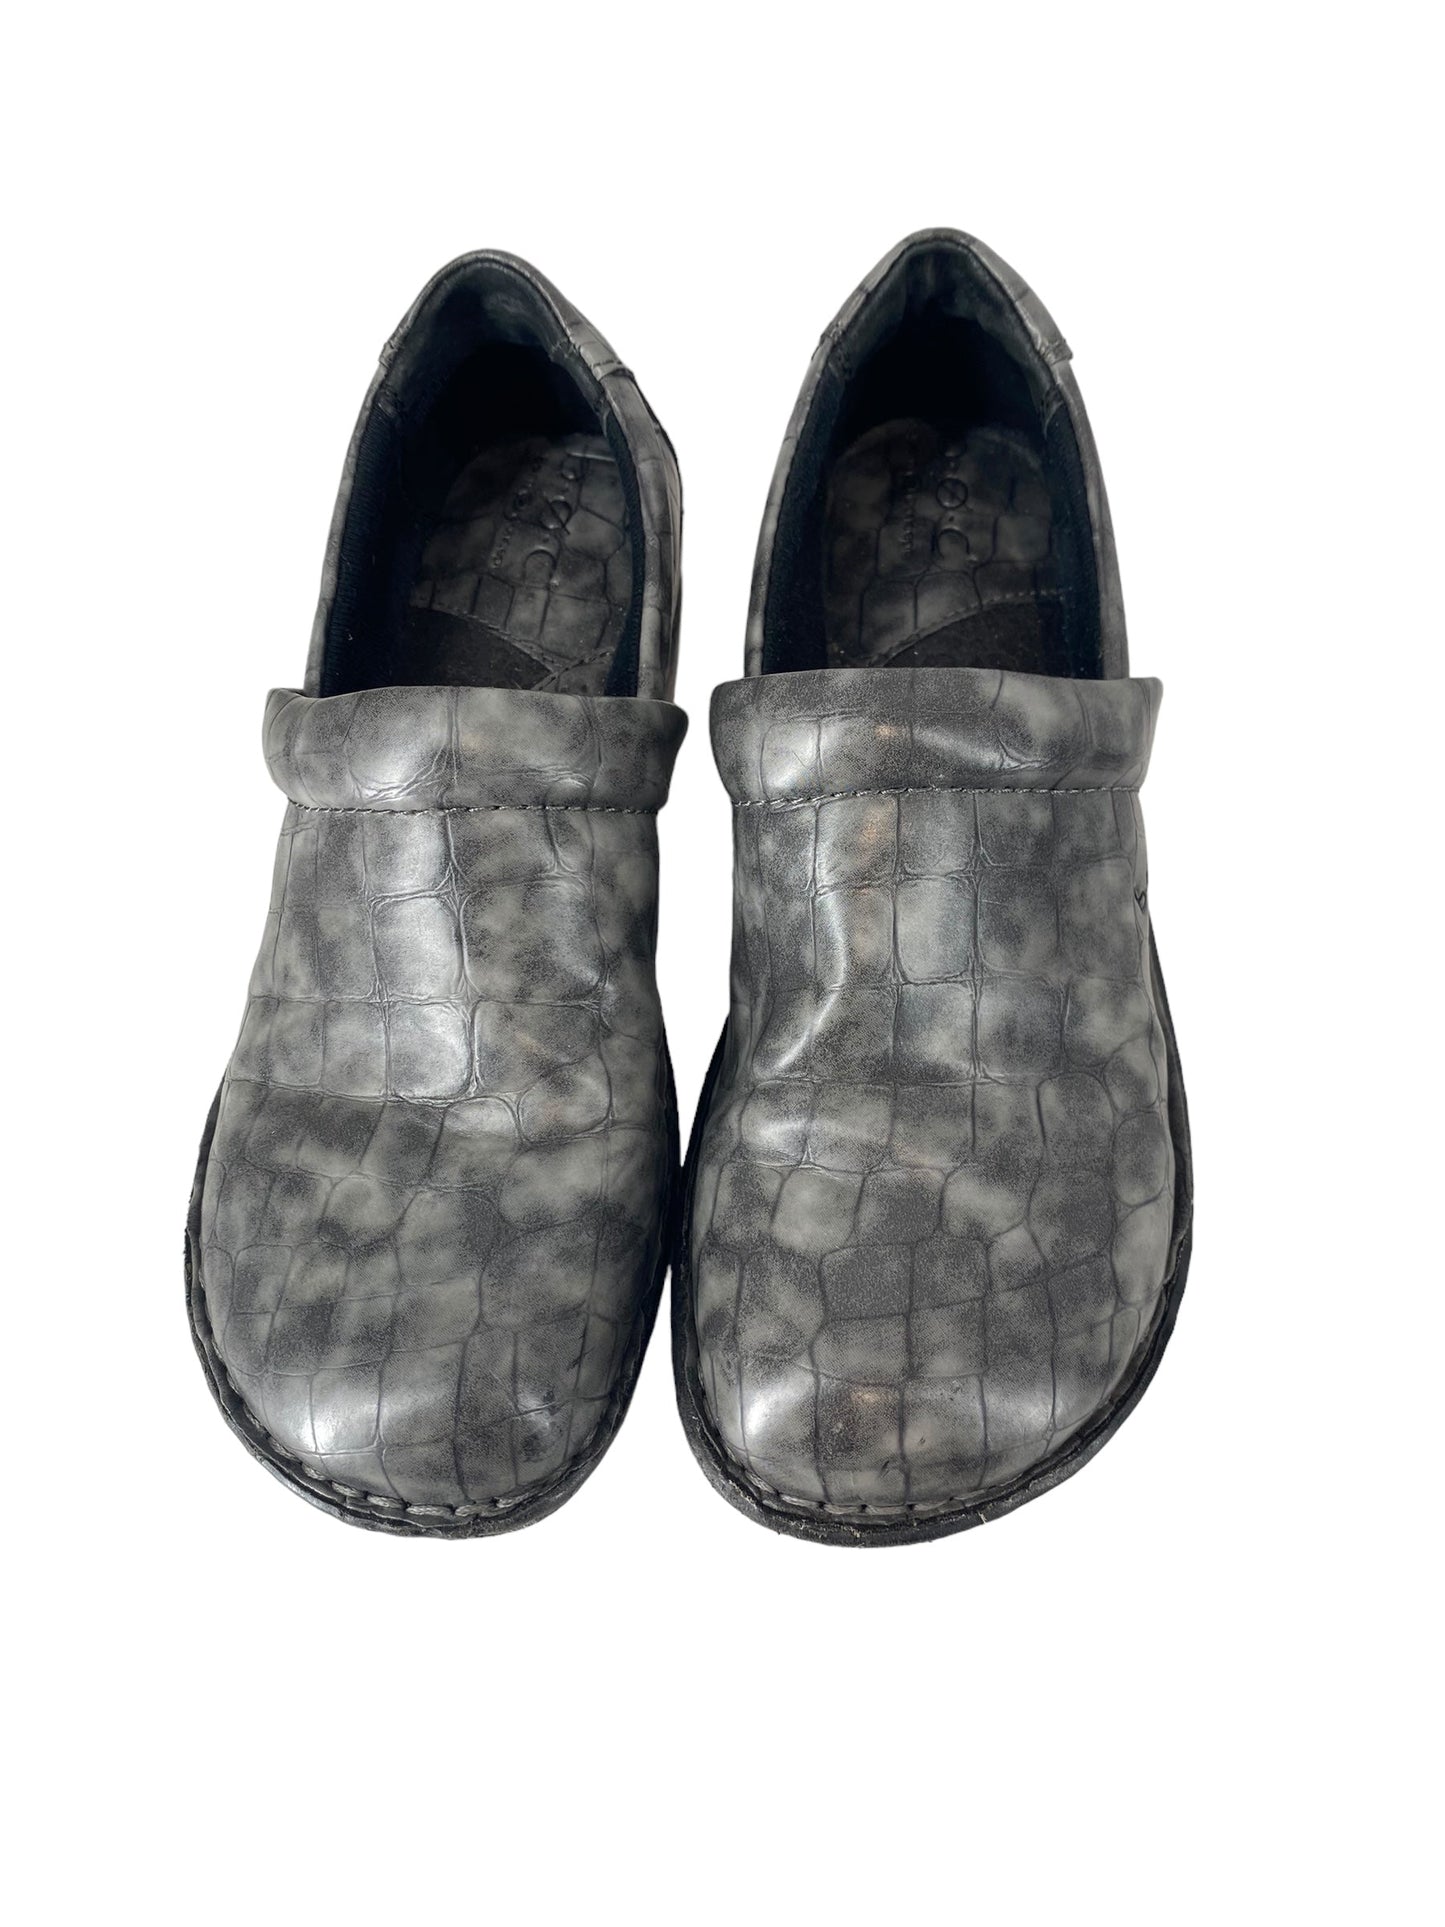 Grey Shoes Flats Boc, Size 7.5